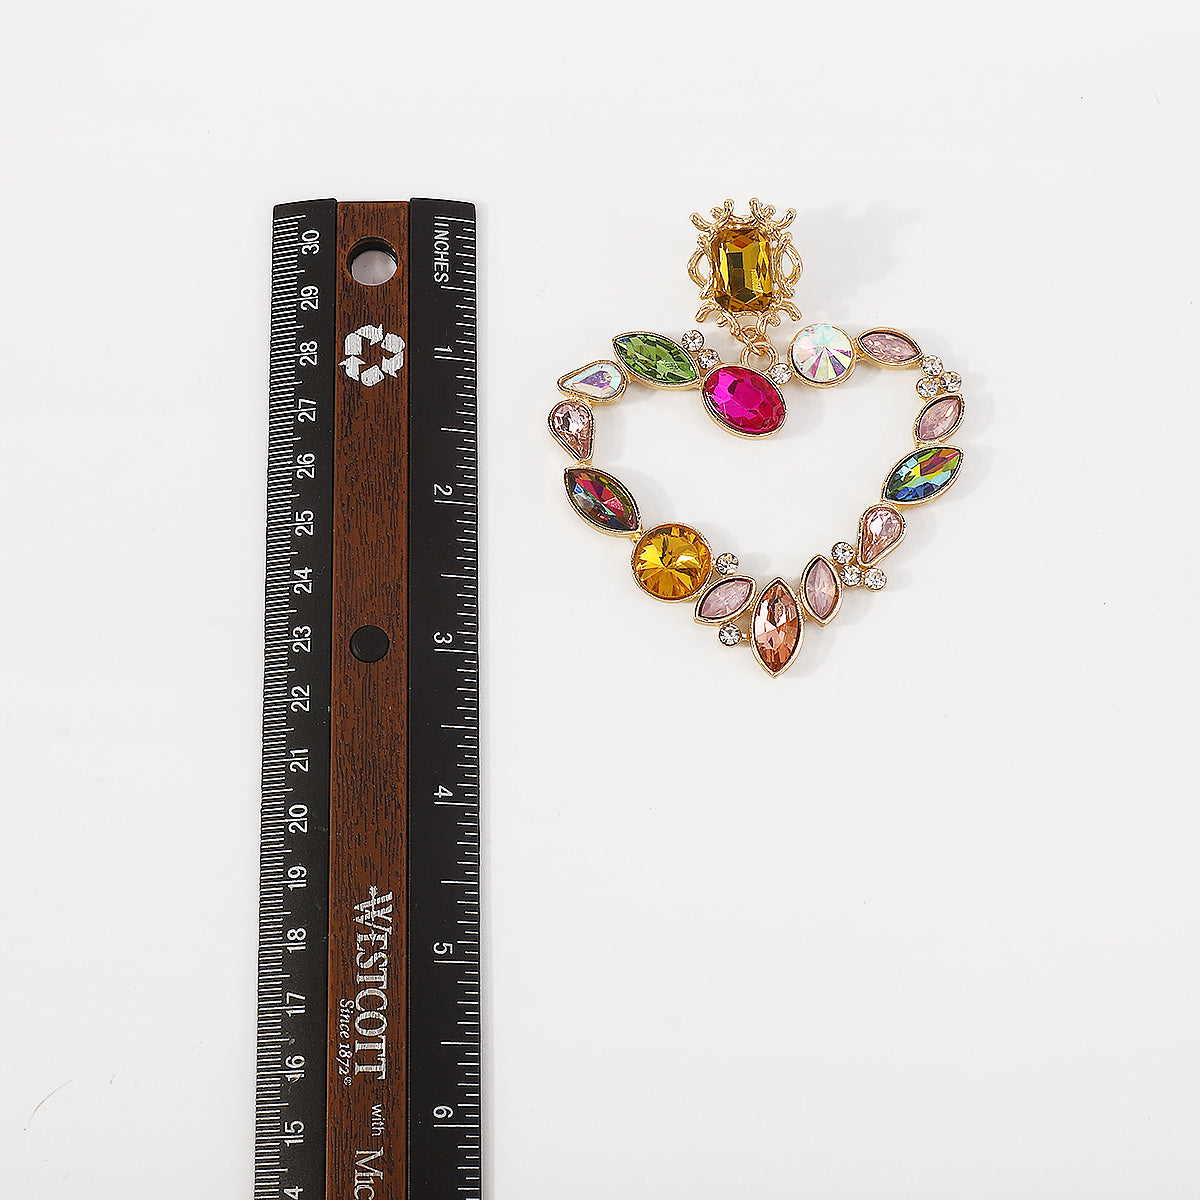 Exquisite Rhinestone Heart Dangle Earrings medyjewelry